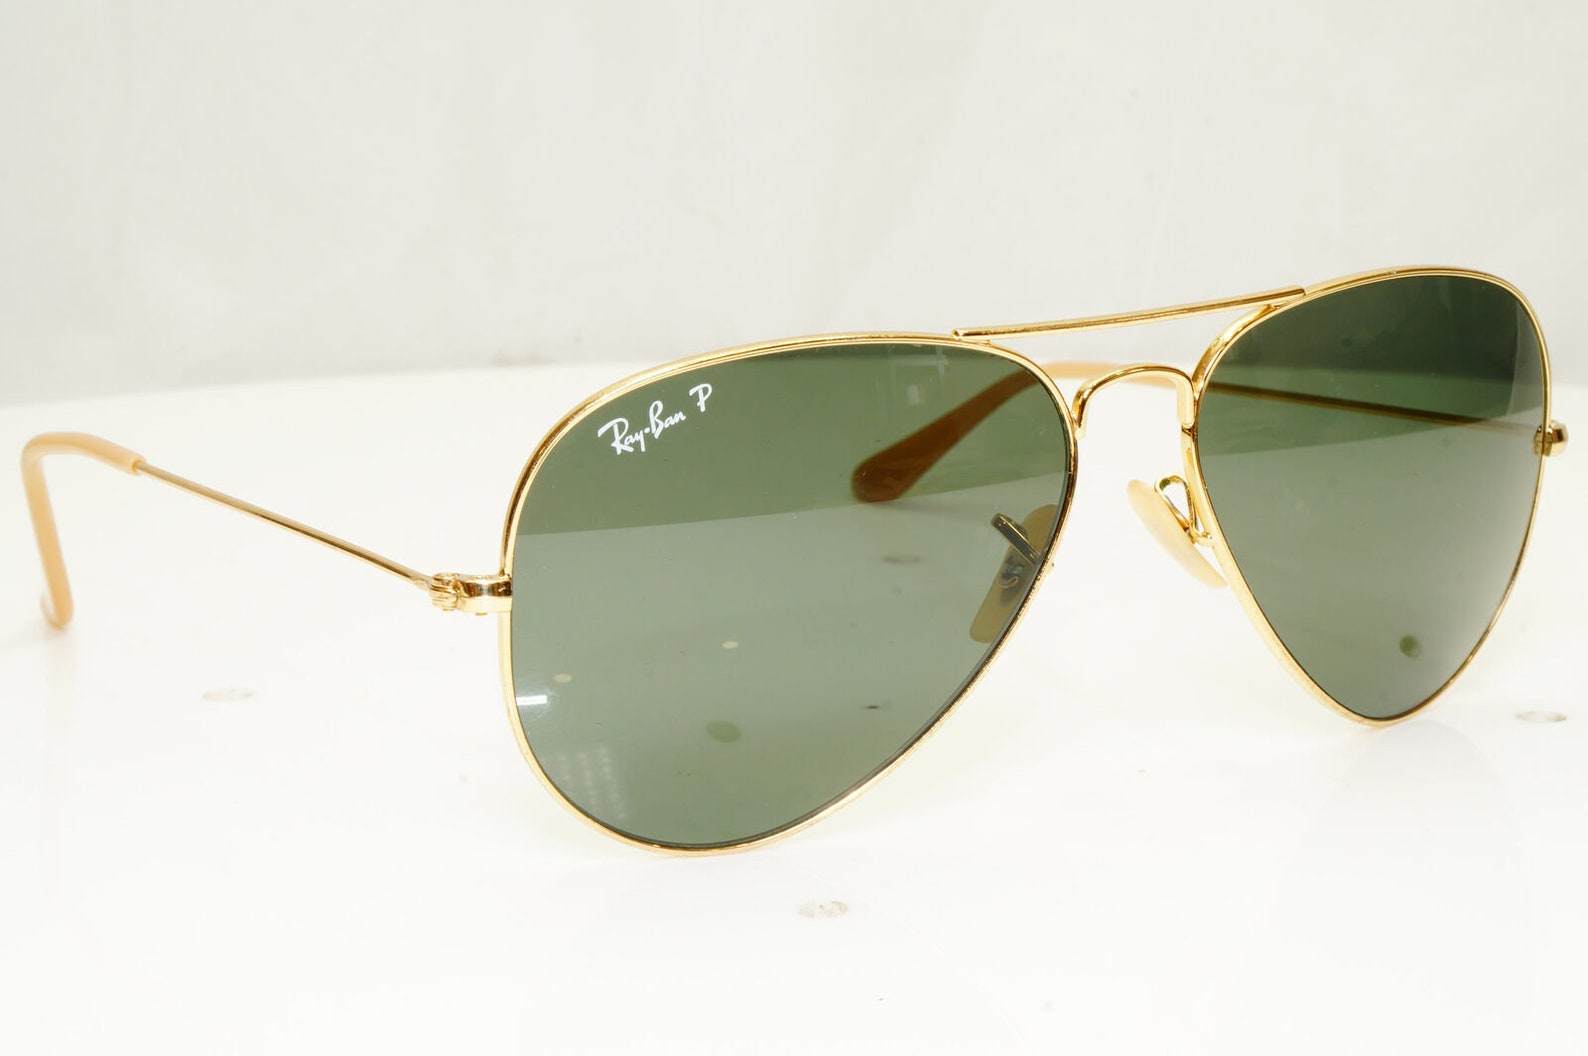 Authentic Ray-Ban Polarized Vintage Sunglasses Rb 3025 Aviator | Etsy